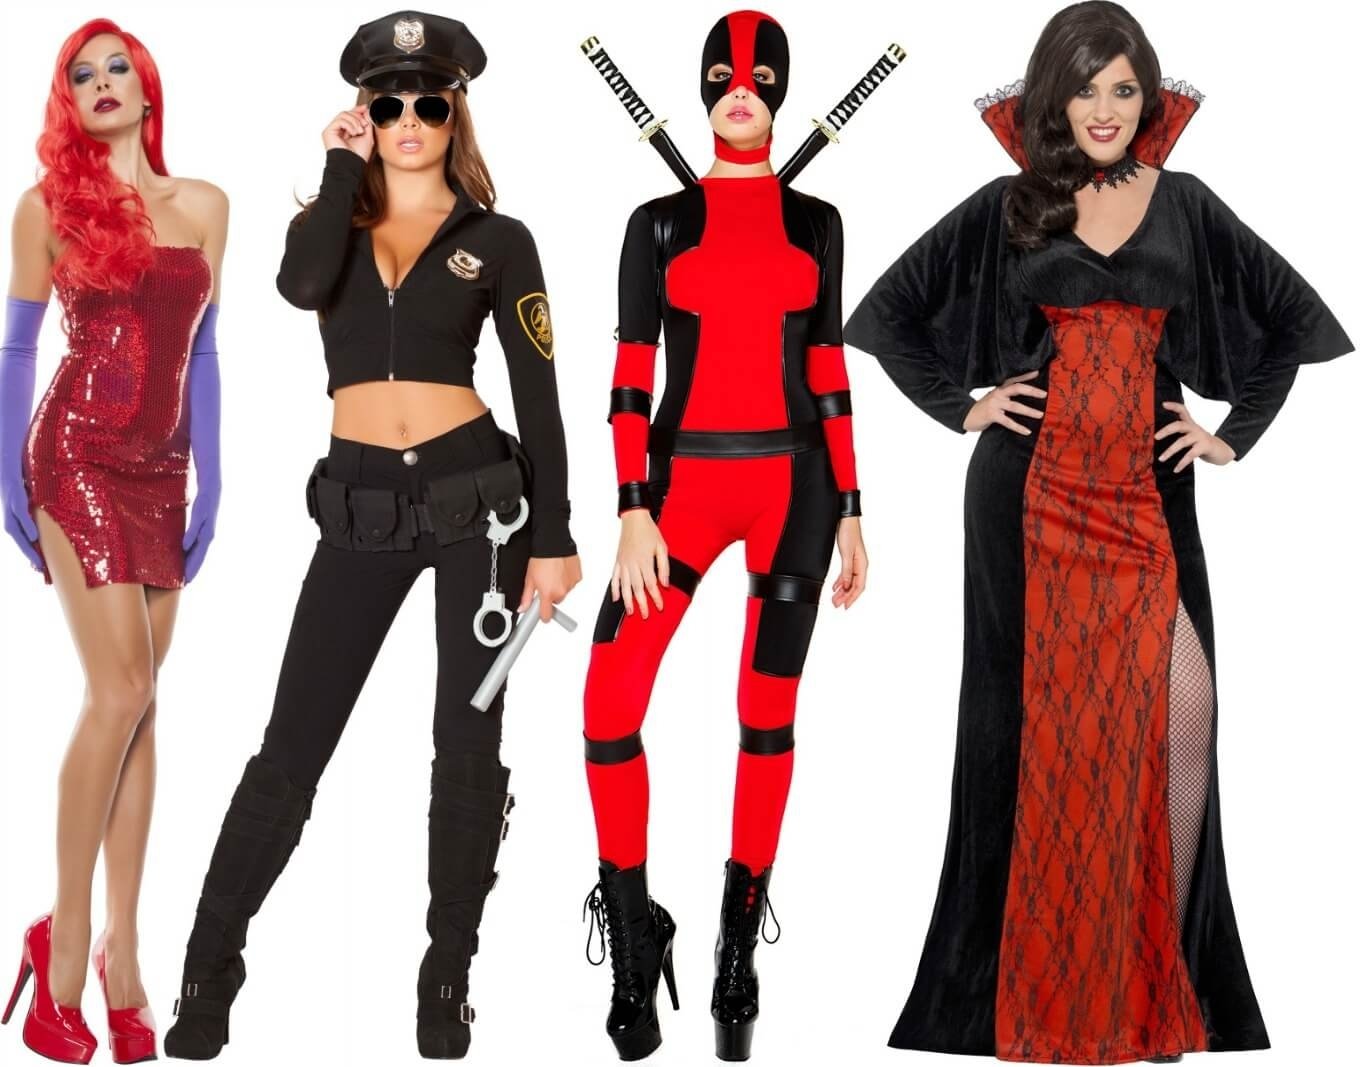 10 Great Cheap Halloween Costume Ideas For Women cheap halloween costume ideas halloween costumes blog 7 2022